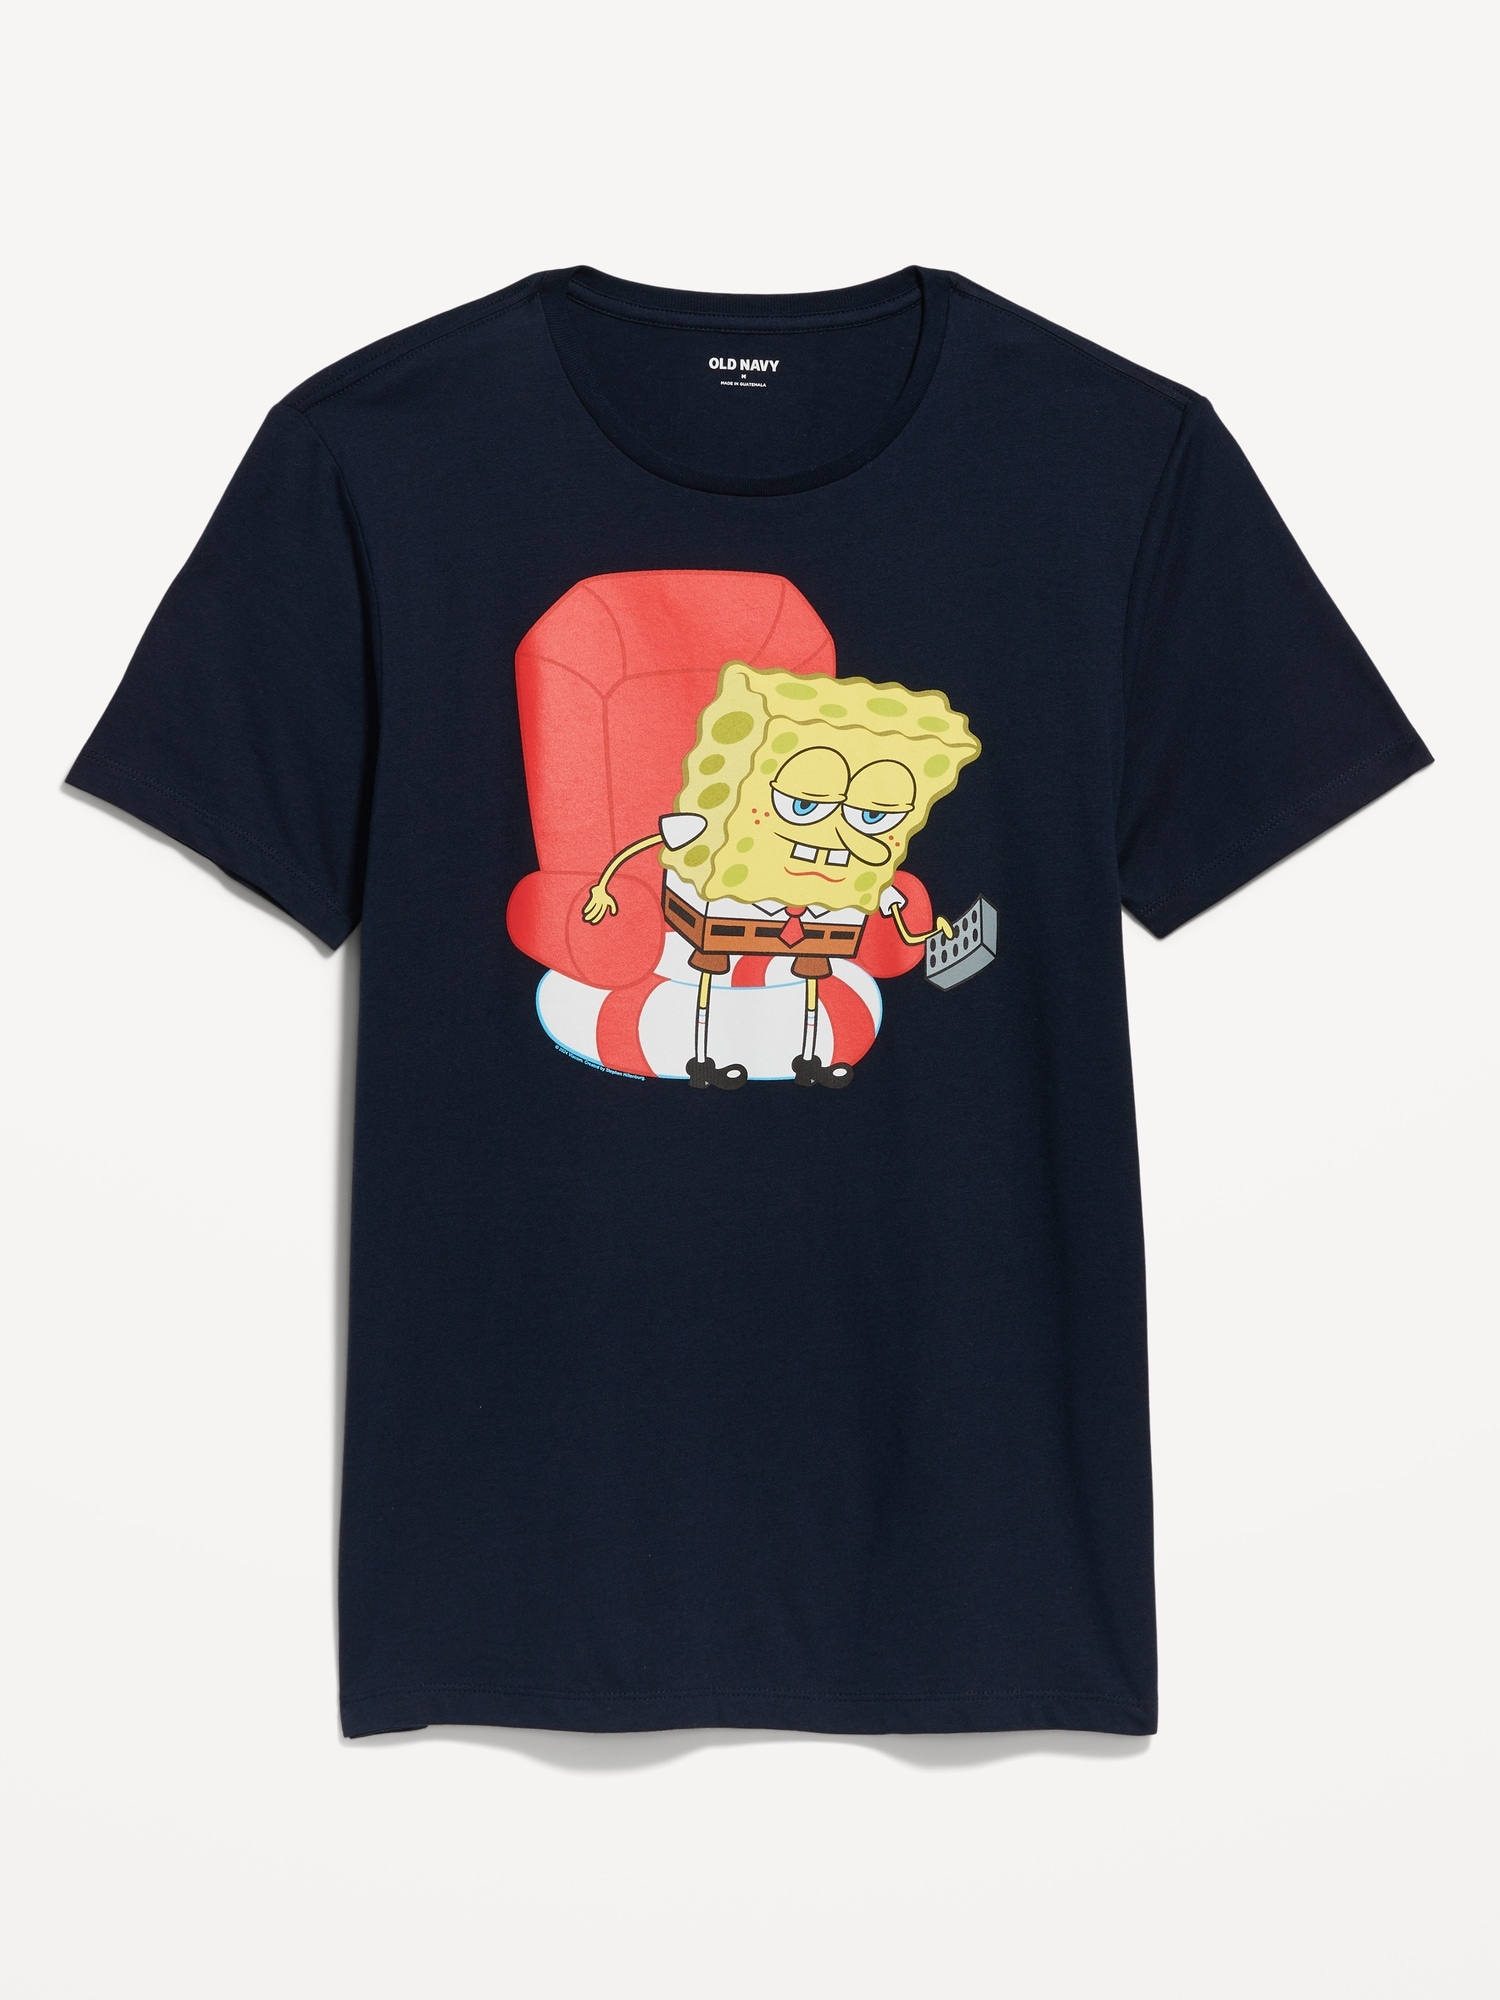 SpongeBob SquarePants Gender-Neutral T-Shirt for Adults